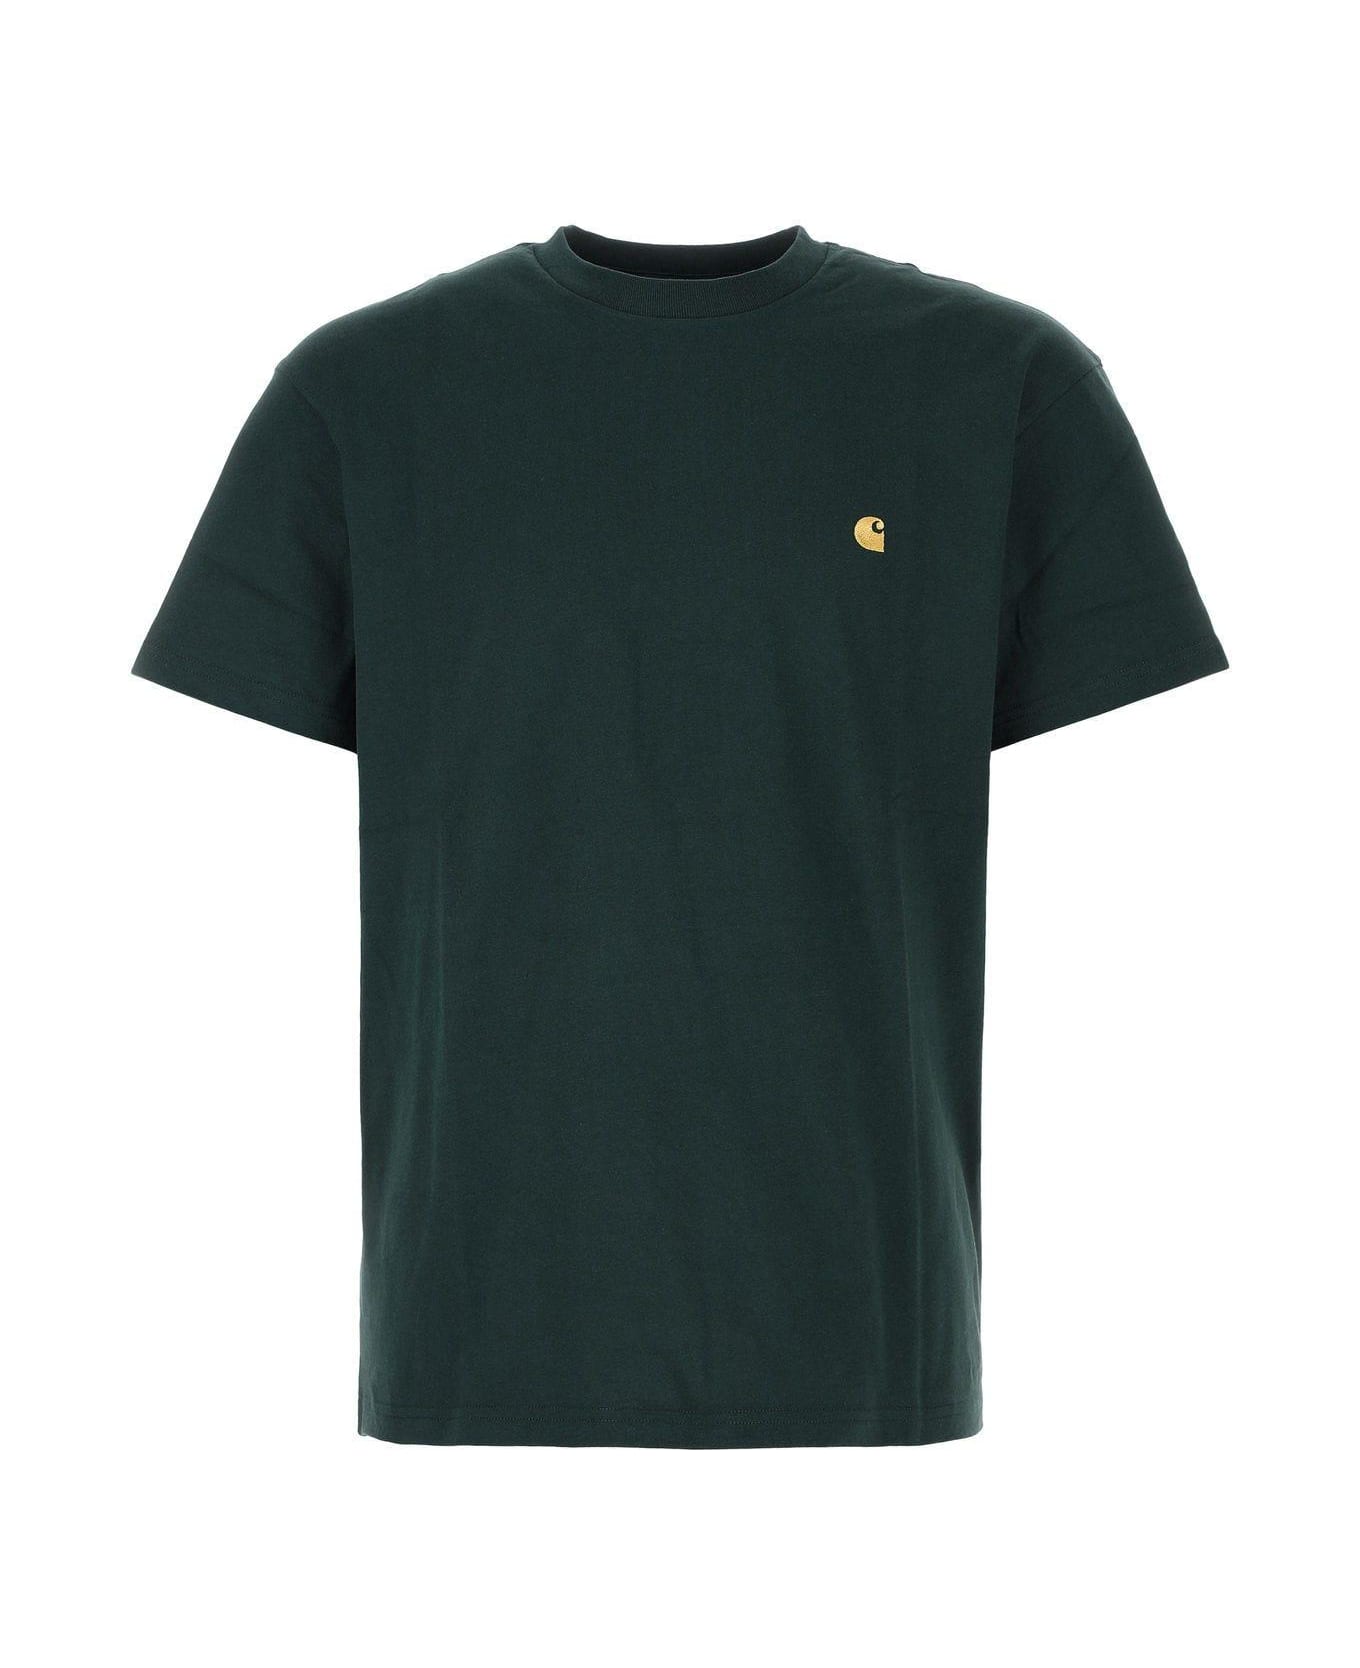 Carhartt Bottle Green Cotton S/s Chase T-shirt - Grxx Botanic Gold